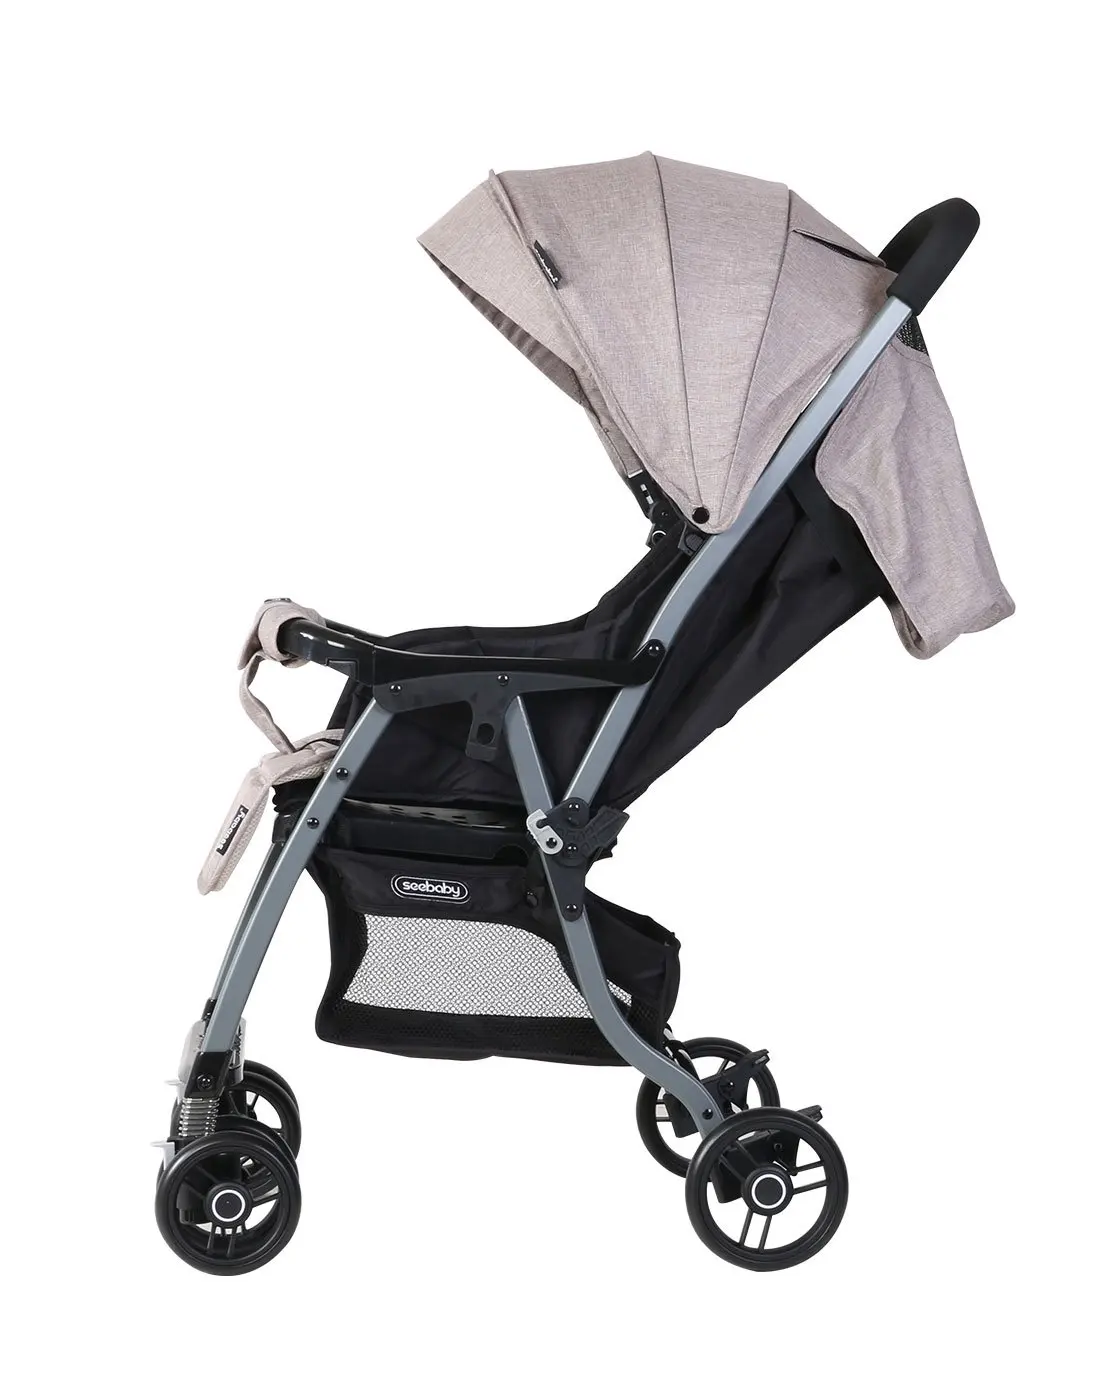 seebaby stroller website